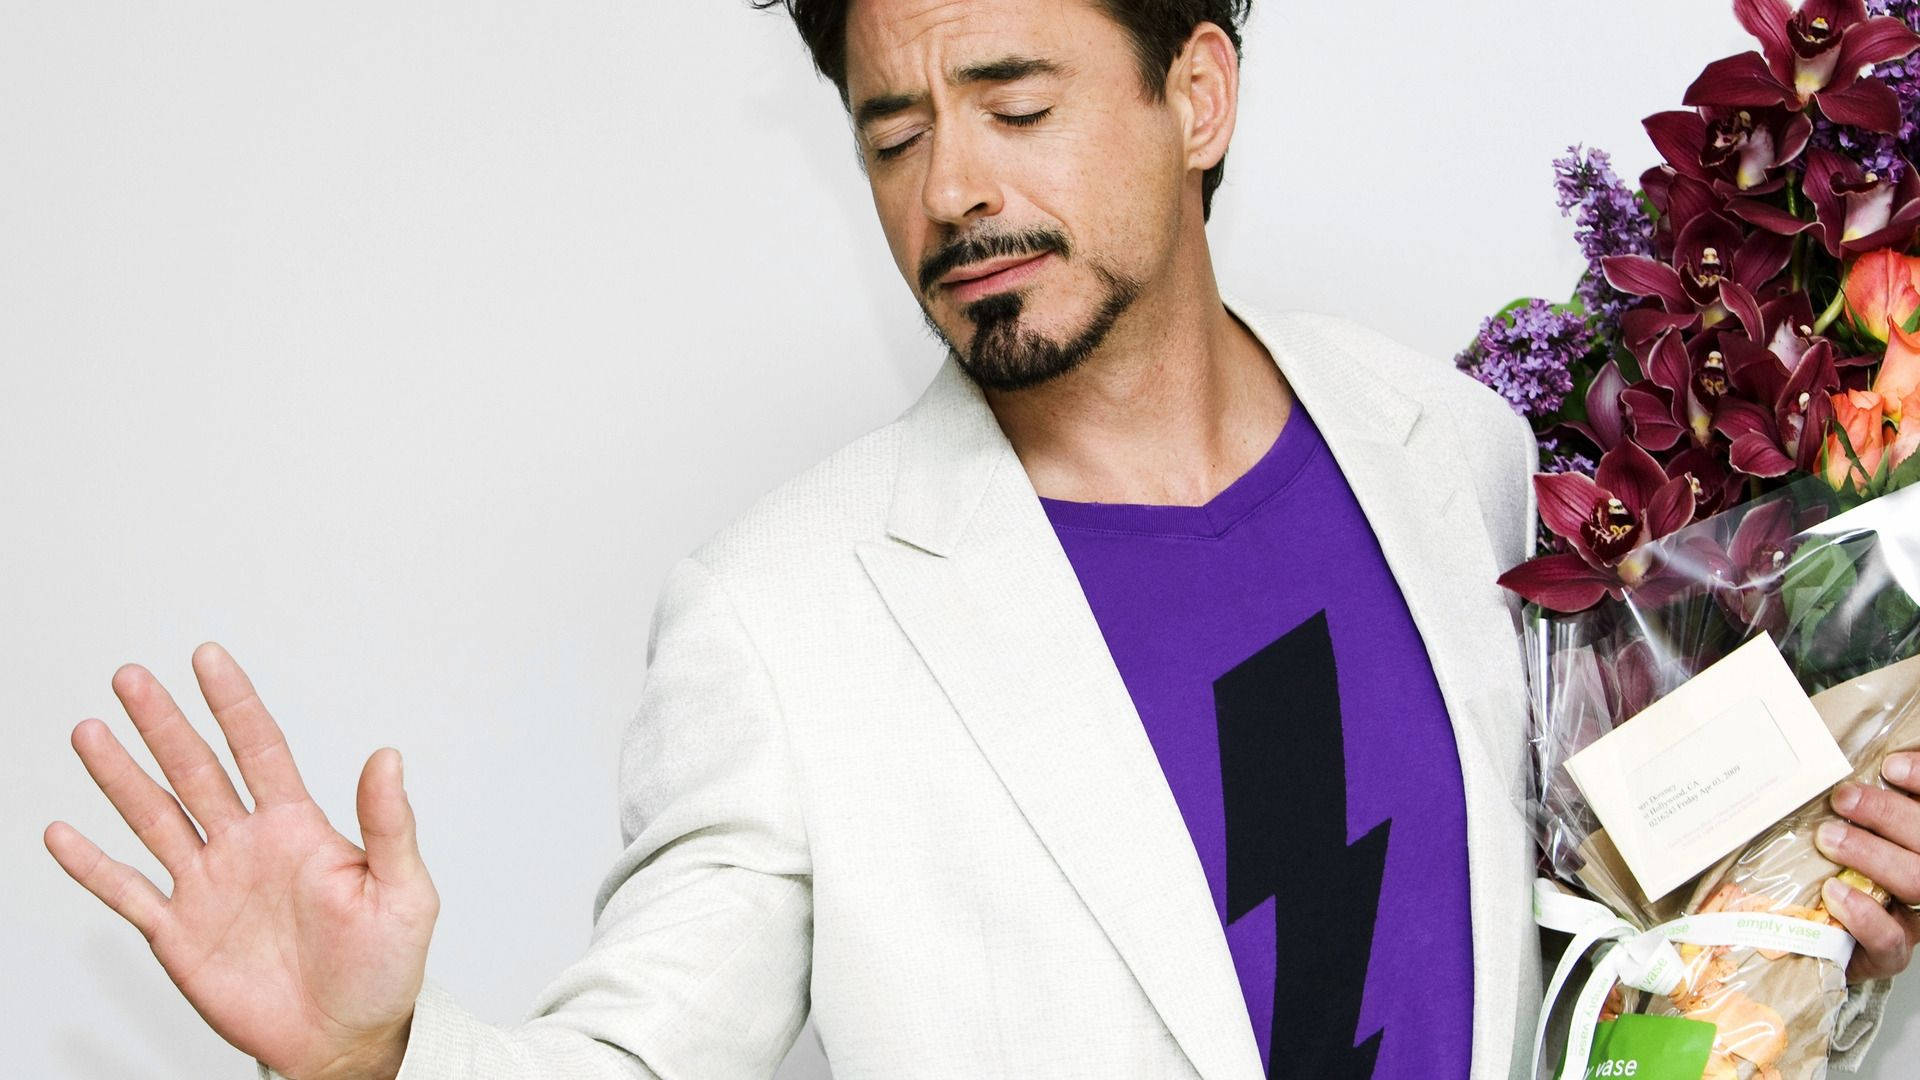 Romantic Robert Downey Jr. In Purple